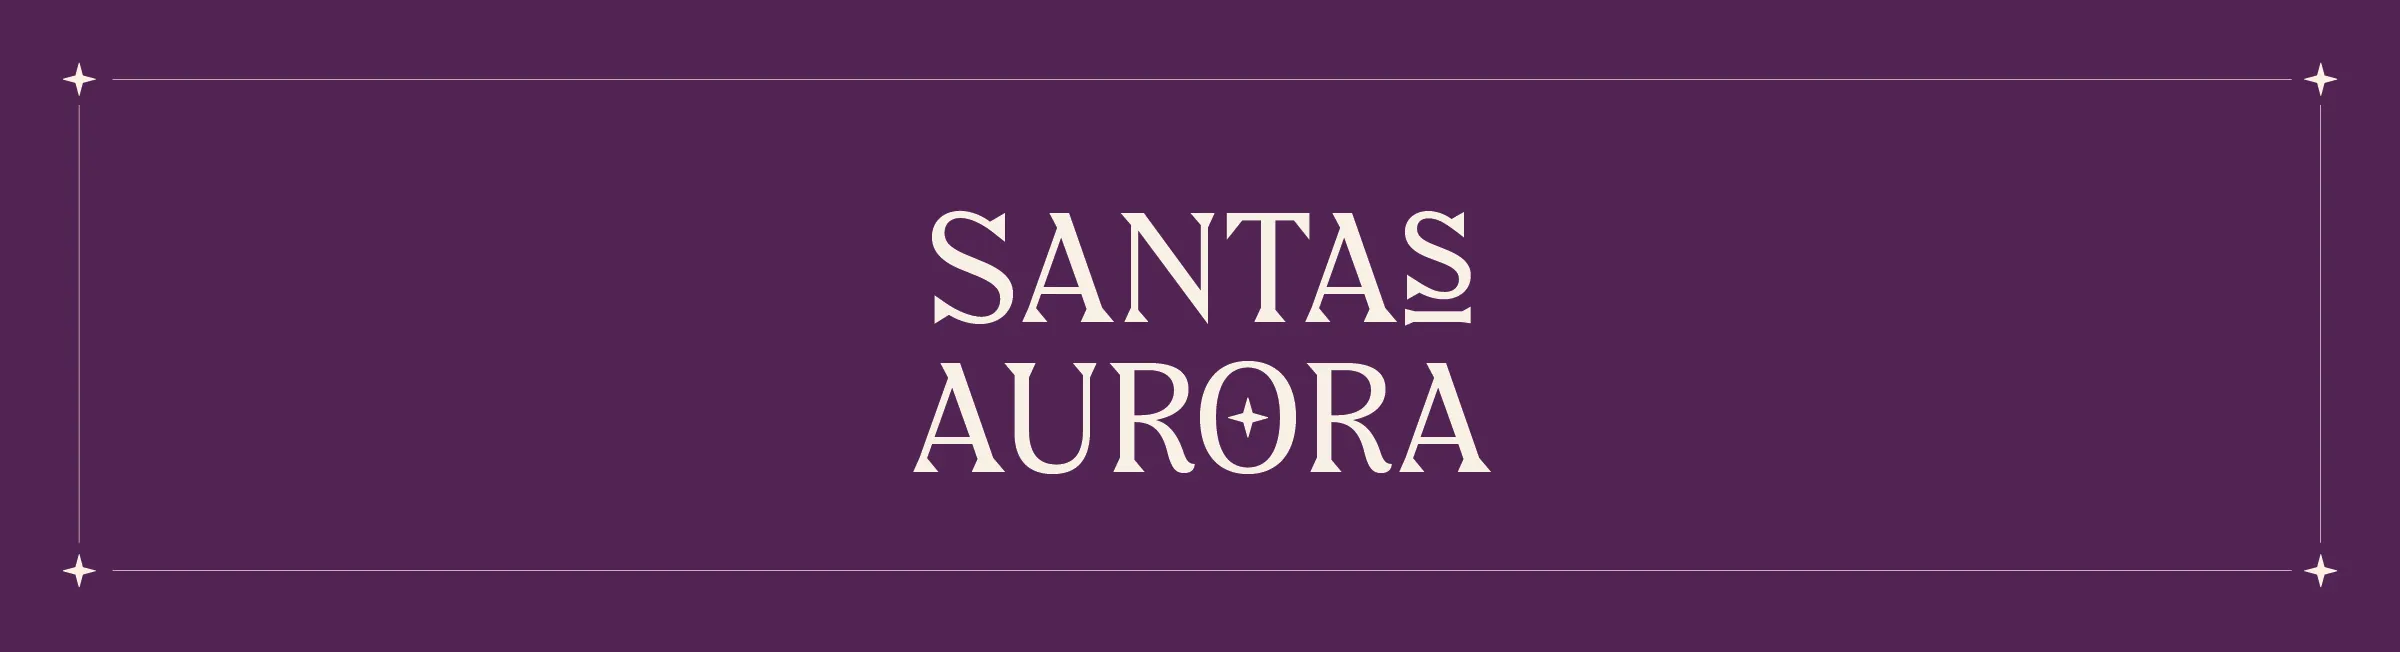 Santas Aurora